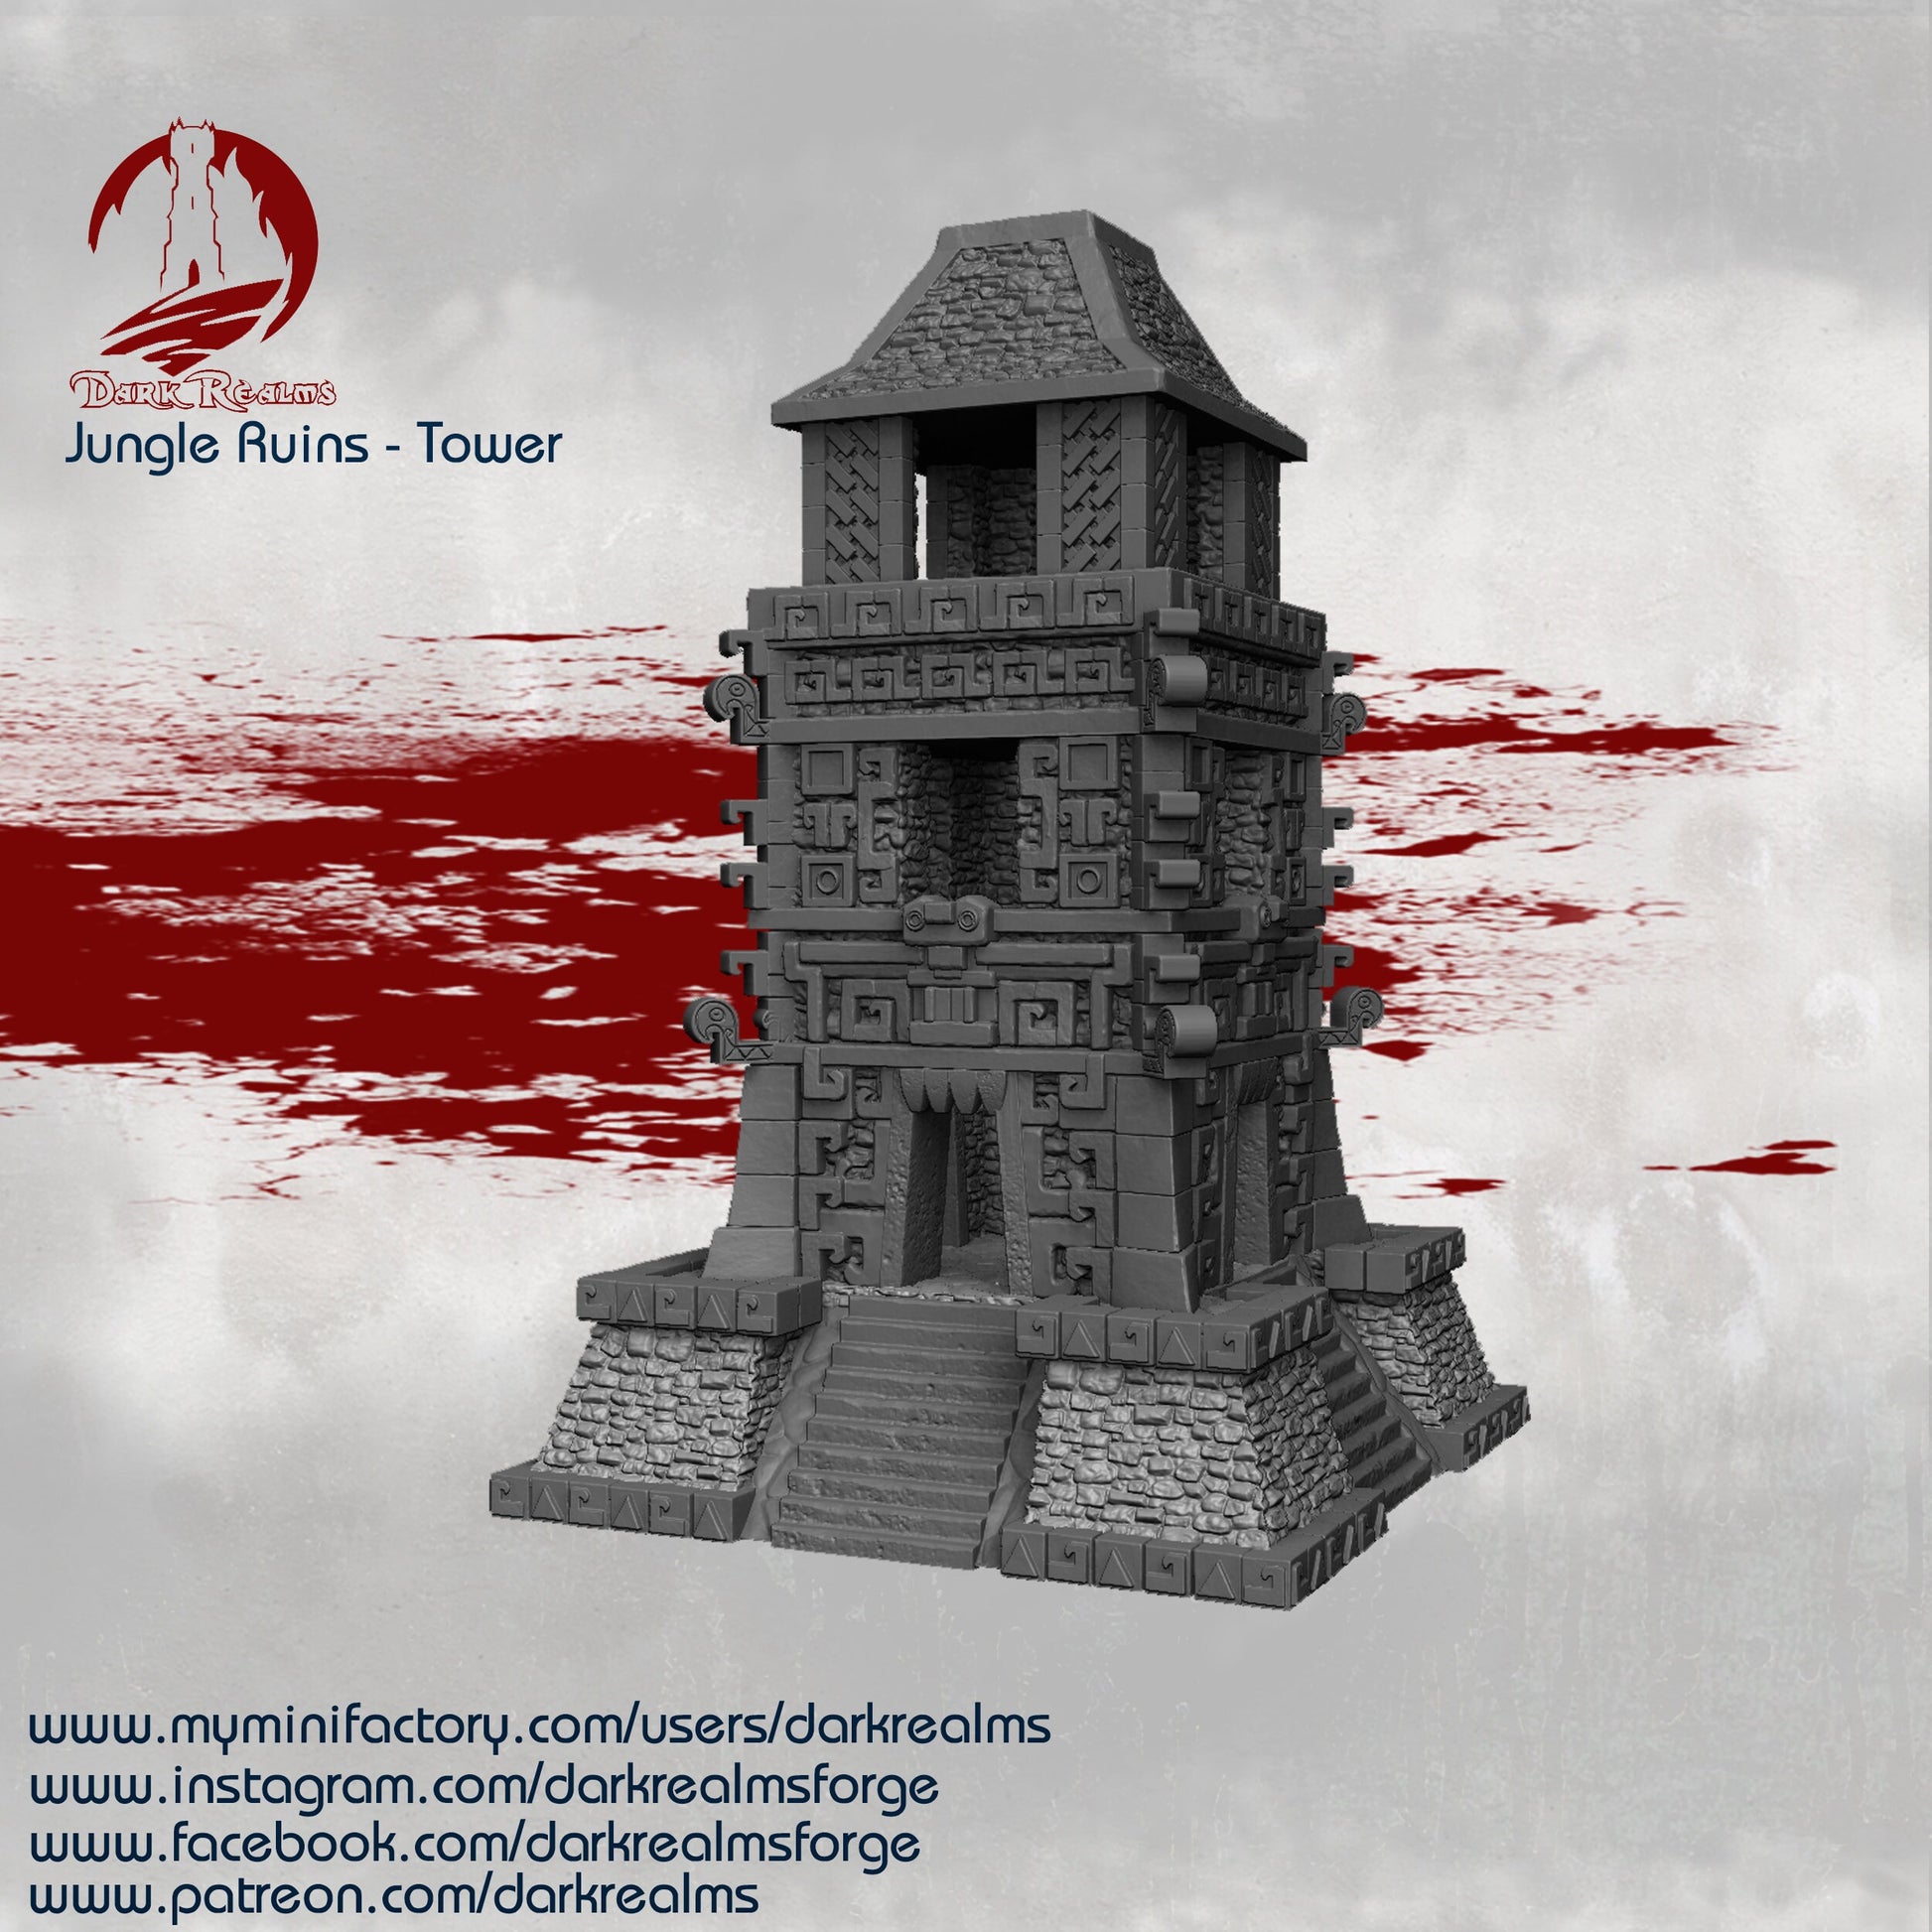 Dark realms - Jungle Ruins Tower - Warhammer - Dungeons and Dragons - 28mm Terrain - warhammer terrain